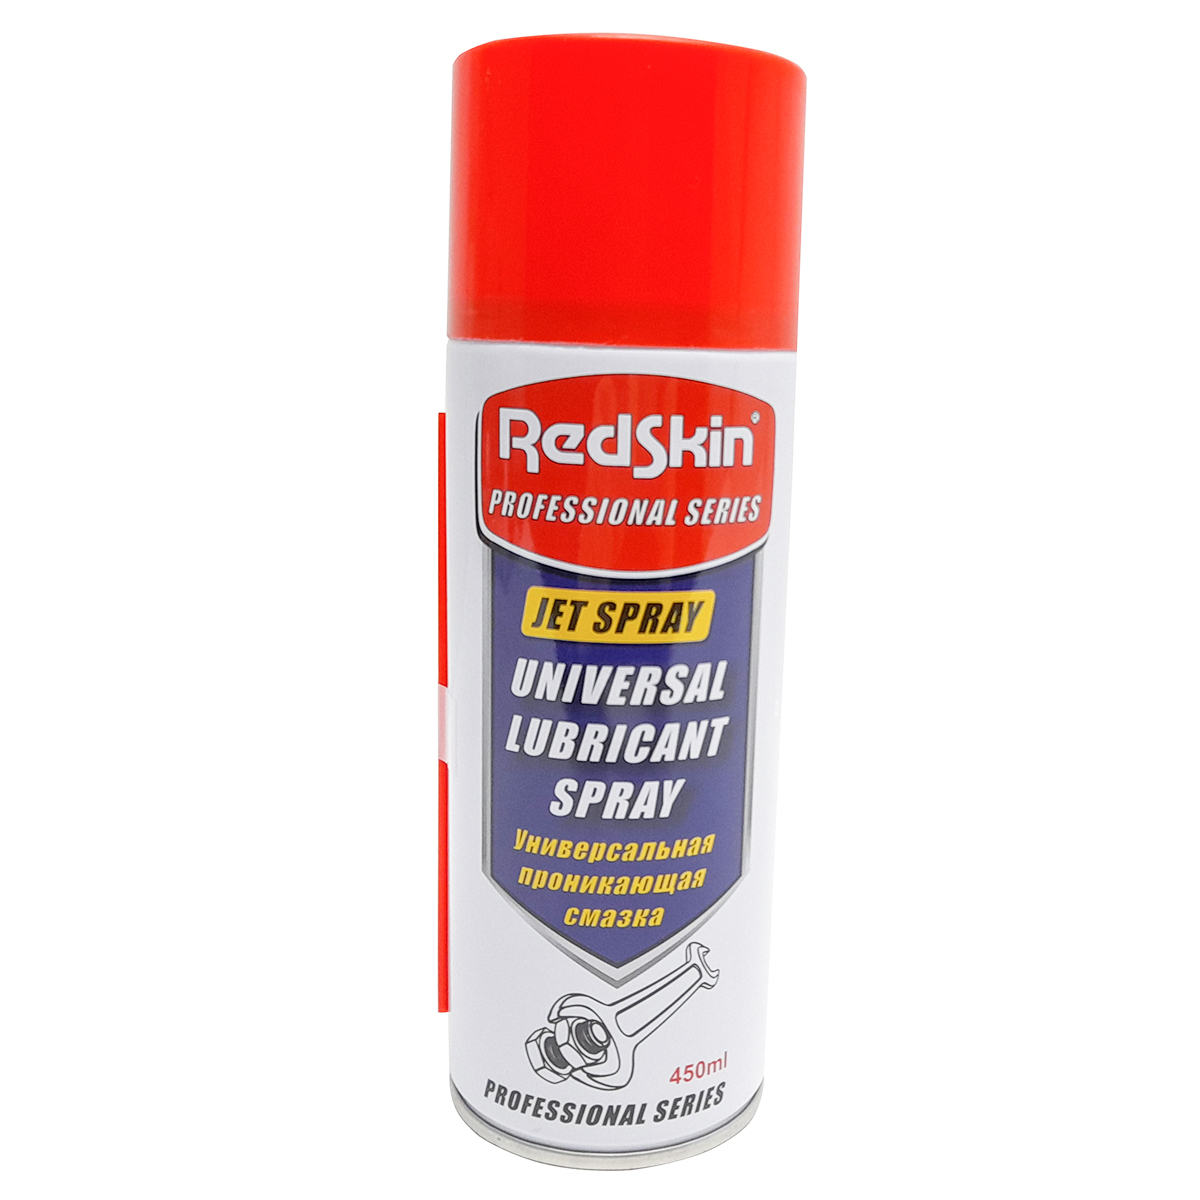 Redskin Universal Lubricant Spray 450 мл. проникающая смазка (1/12)